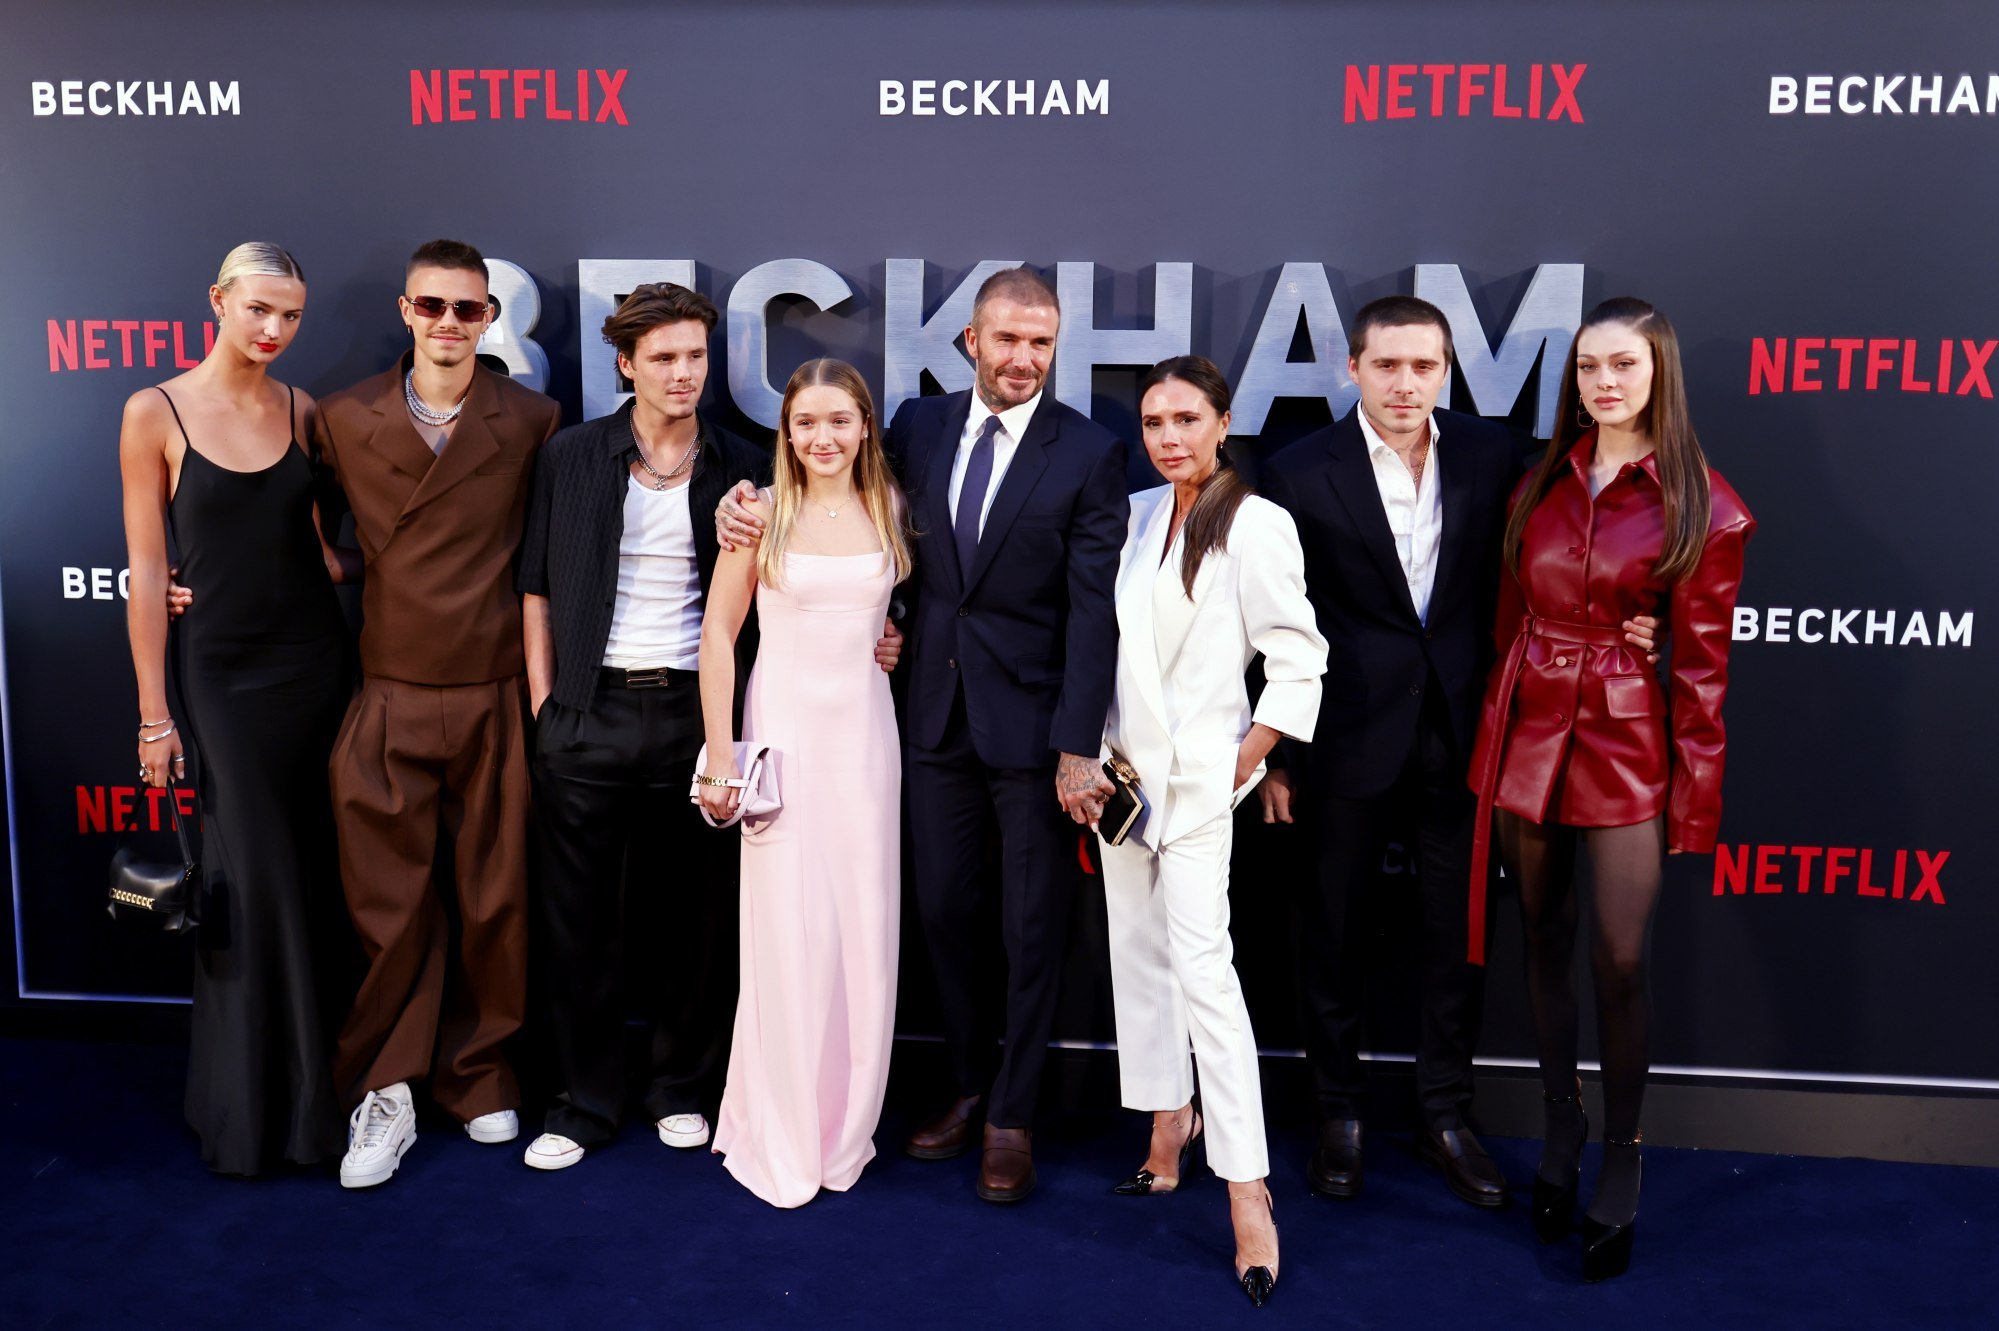 David Beckham sidekicks: 6 football icons in the Netflix docuseries who ...